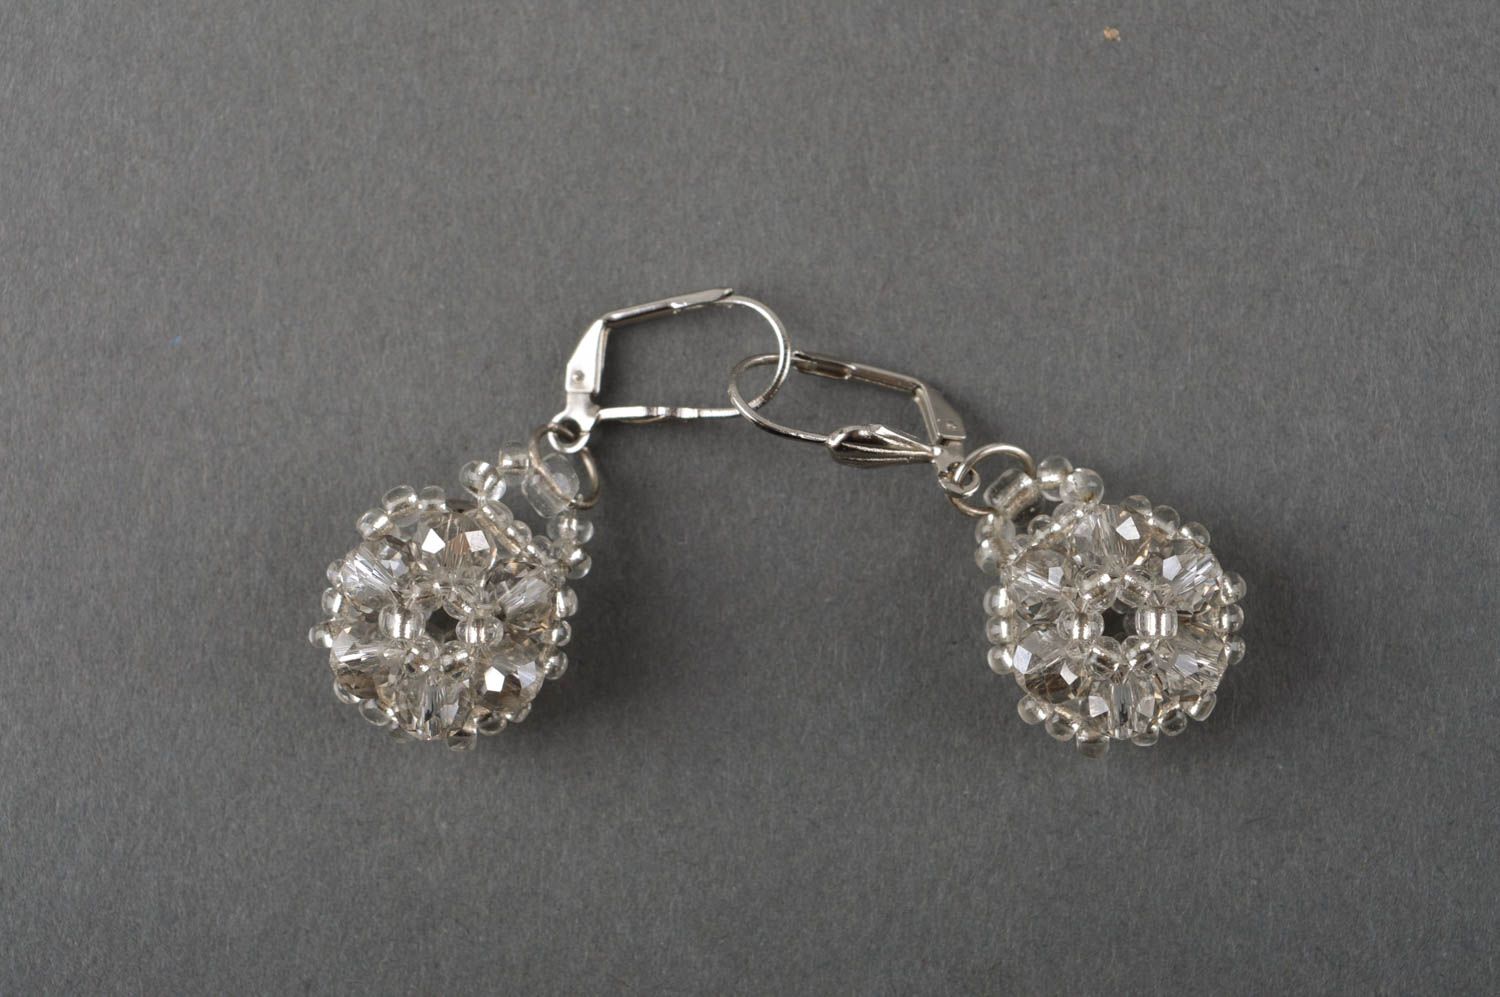 Handmade crystal earrings with charms evening jewelry handmade beaded accessory photo 2